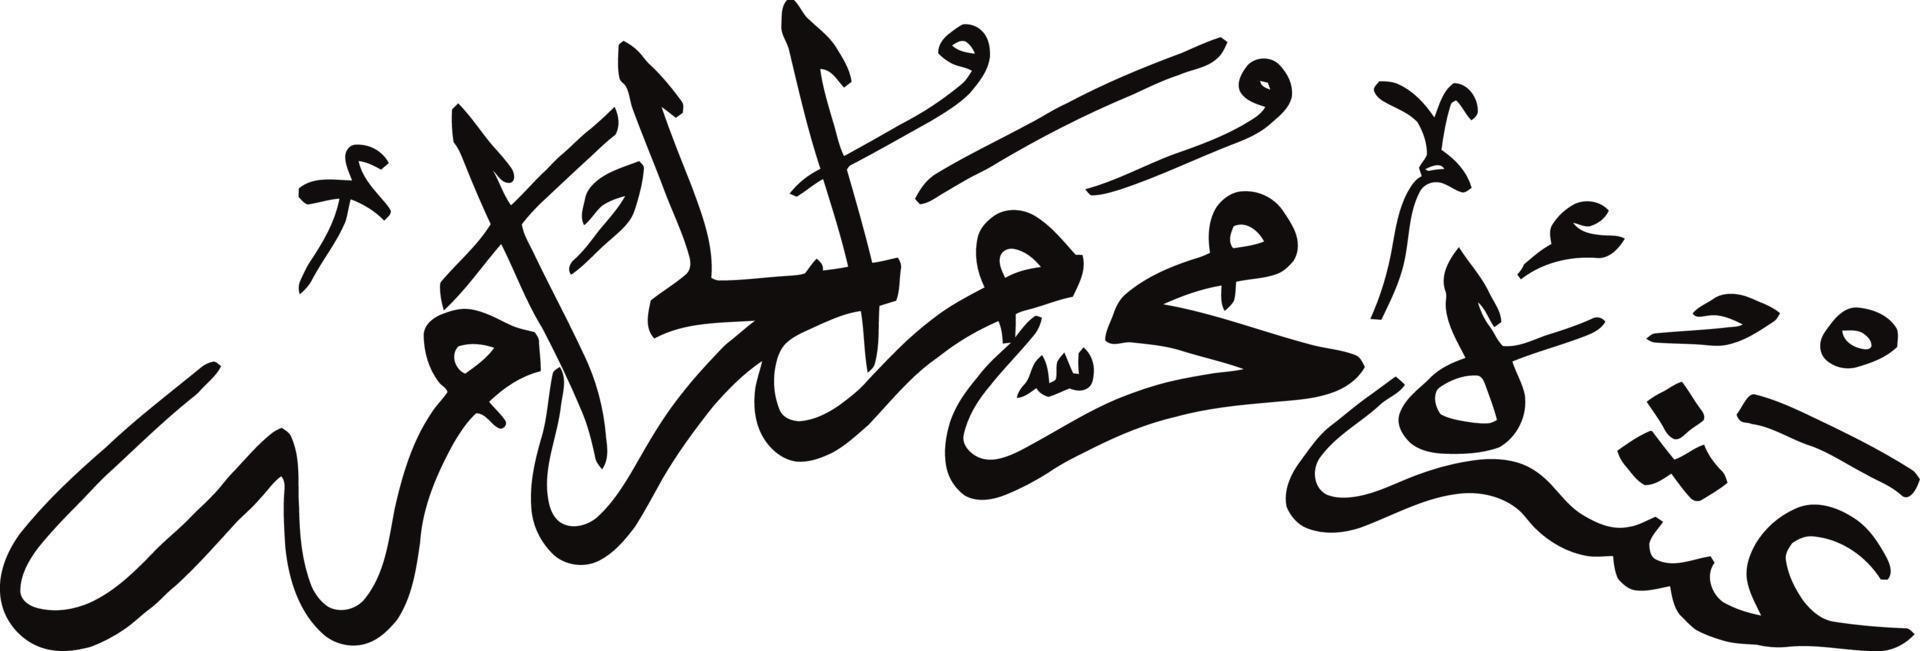 ashra muharam al hraam título caligrafía árabe islámica vector libre